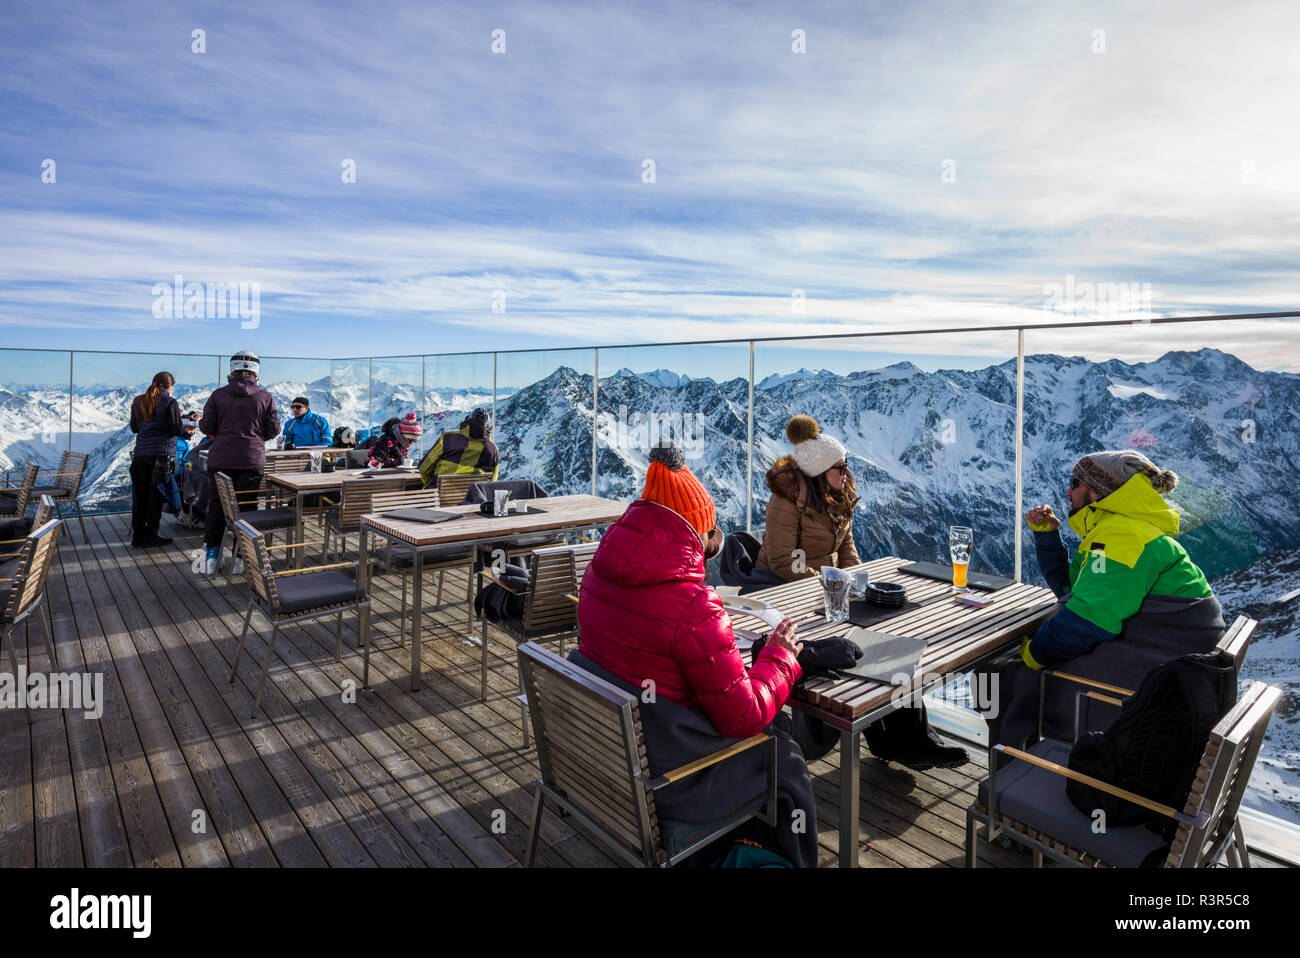 Austria, Tyrol, Otztal, Solden, Gaislachkogl ski mountain, Ice Q gourmet restaurant, outdoor dining Stock Photo